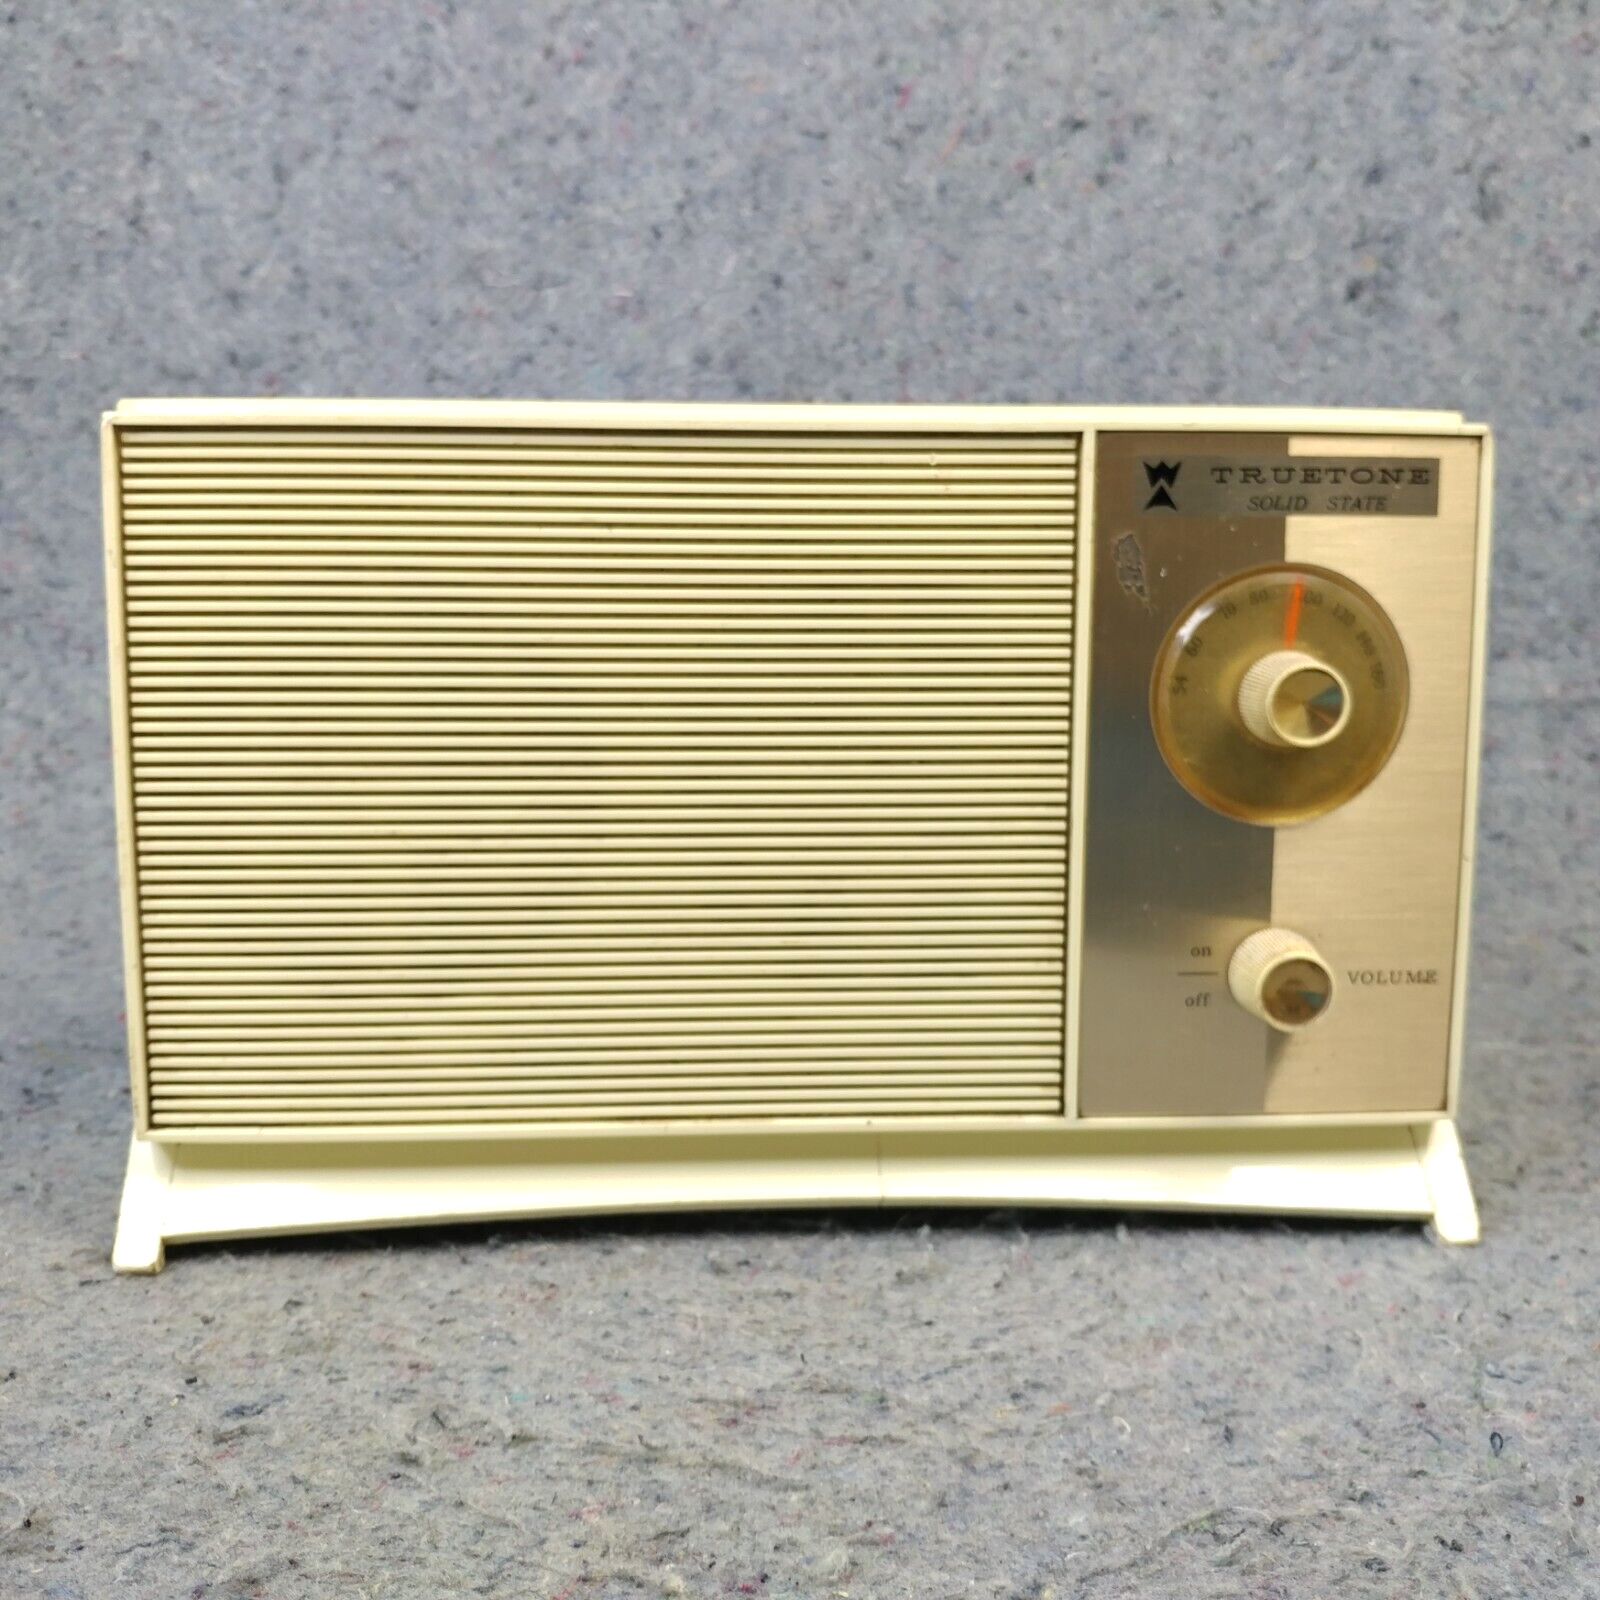 Truetone Tube Radio Model DC 1612 AM Vintage 1960s MCM Mid Century Cream White